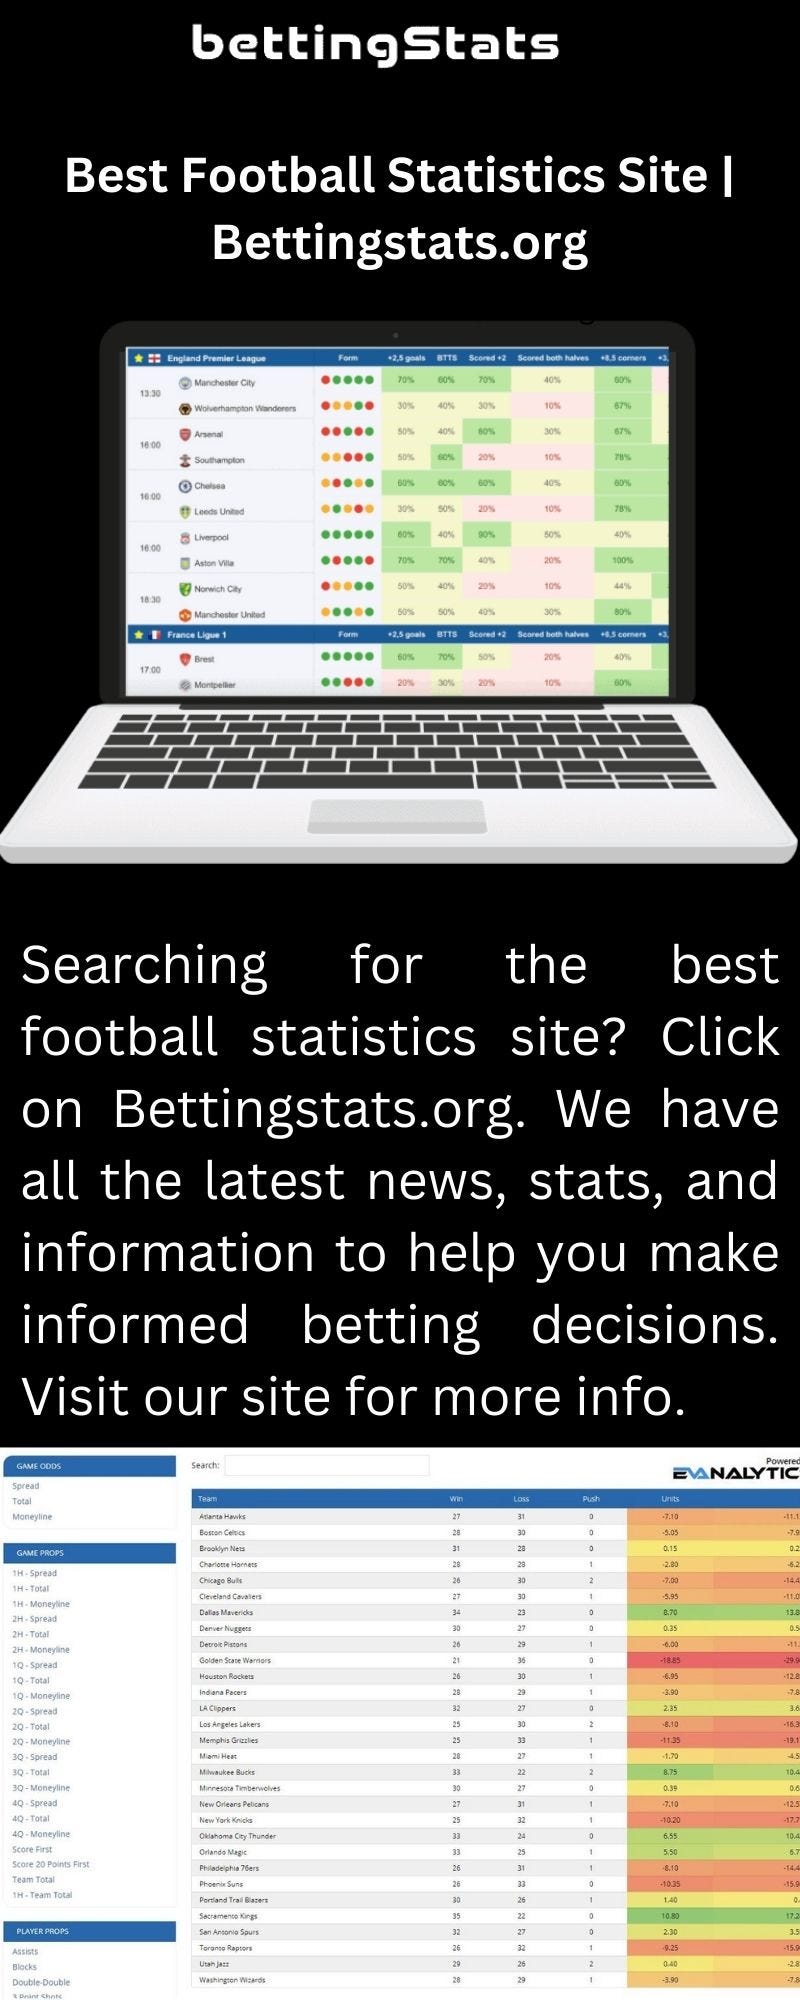 Best Football Statistics Site Bettingstats - Bettingstats Org